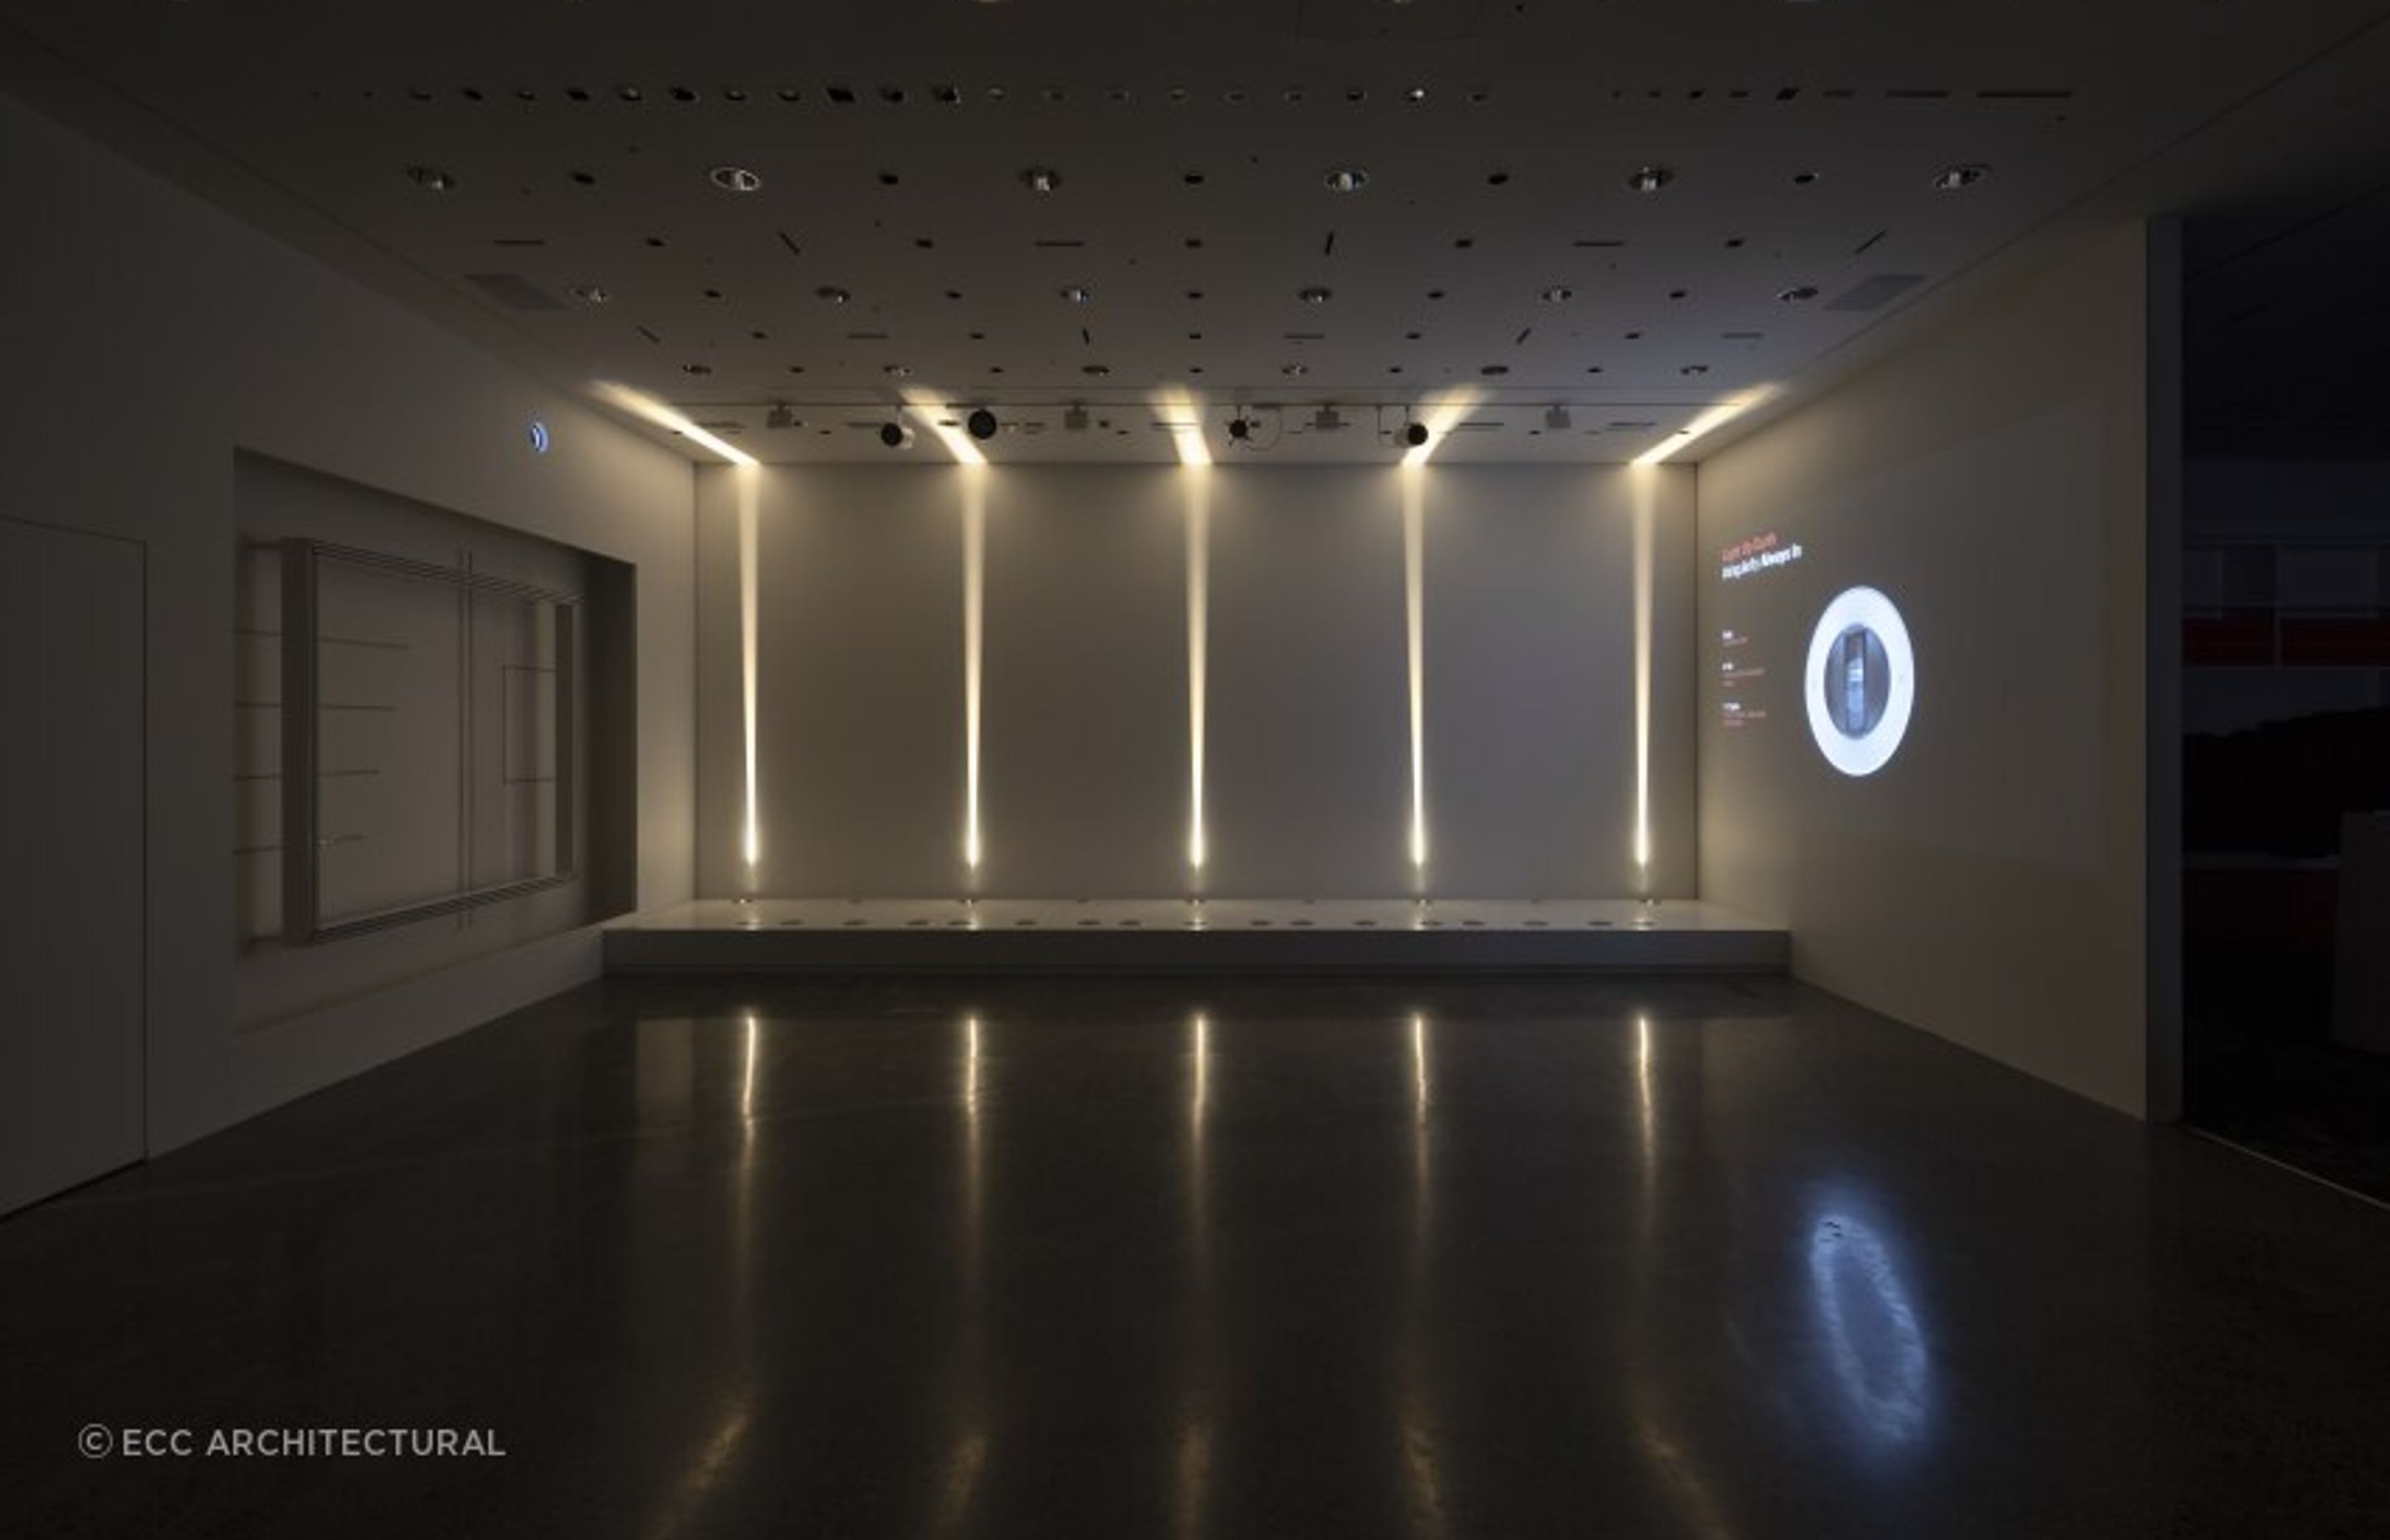 iGuzzini: An Immersive Lighting Design Experience